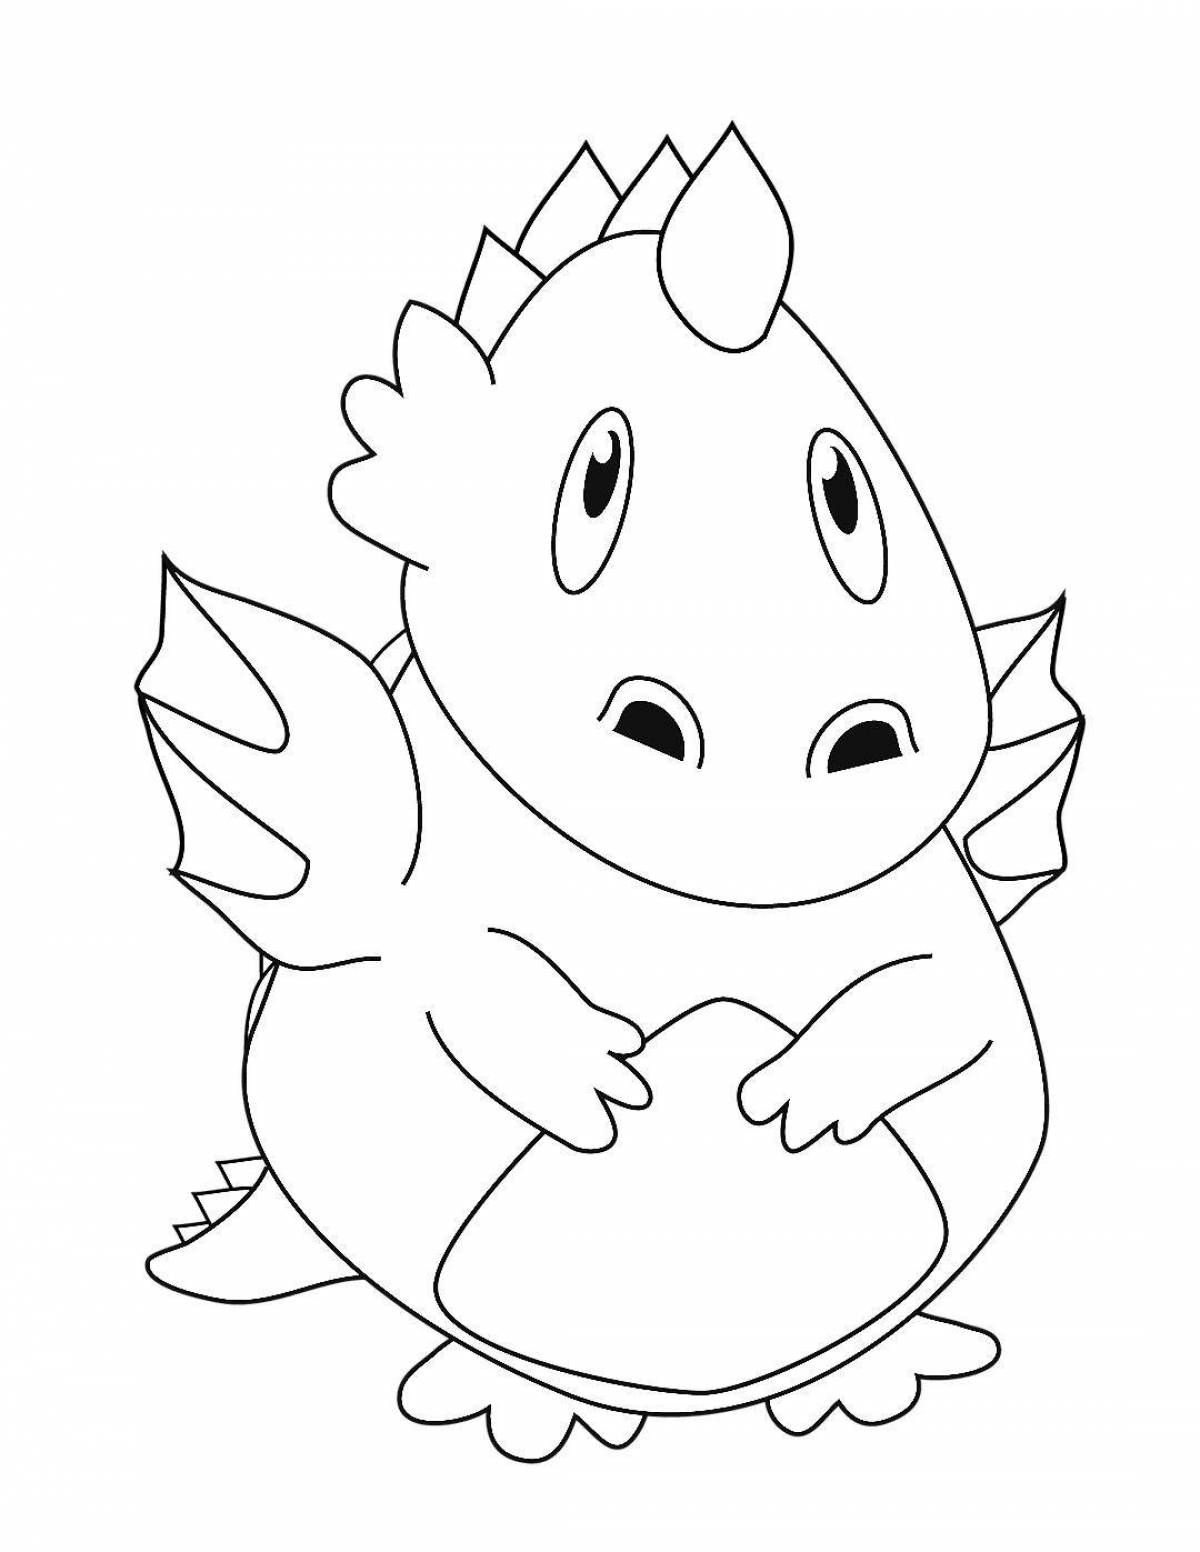 Precious cute dragon coloring book